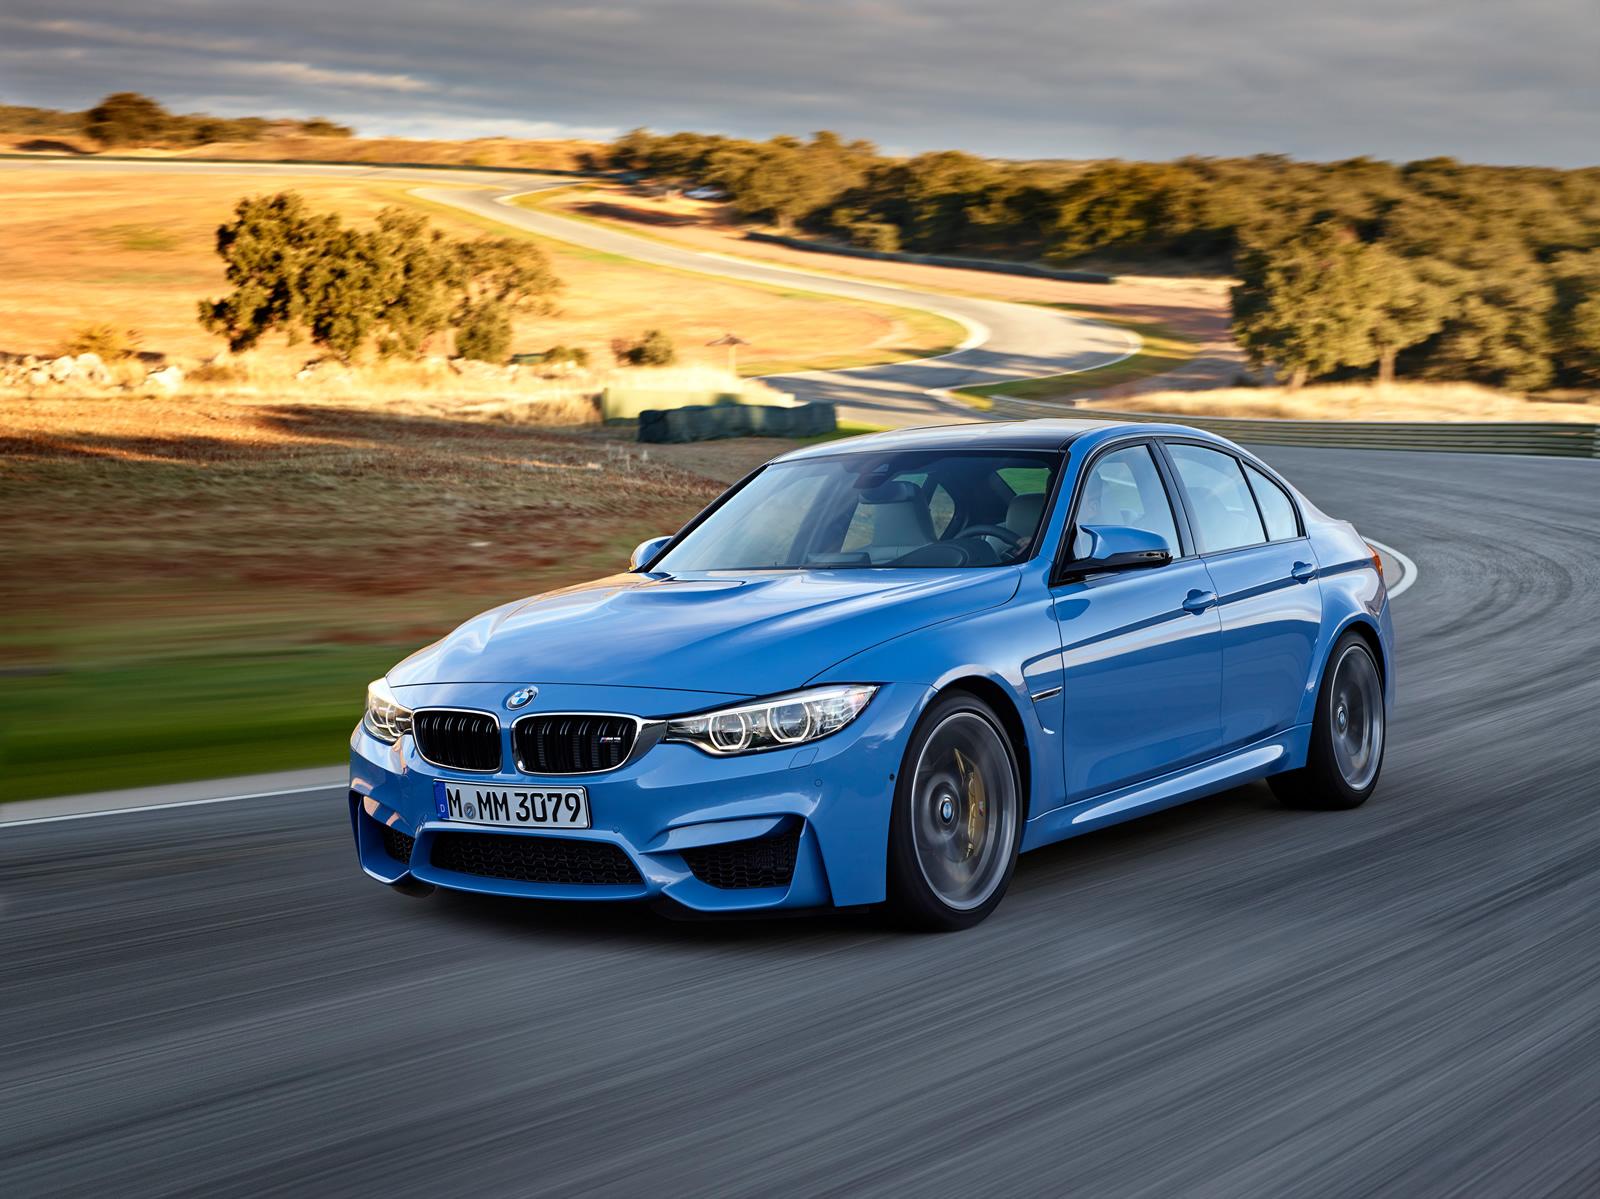 0-276 км/ч с новото BMW M3 (видео)